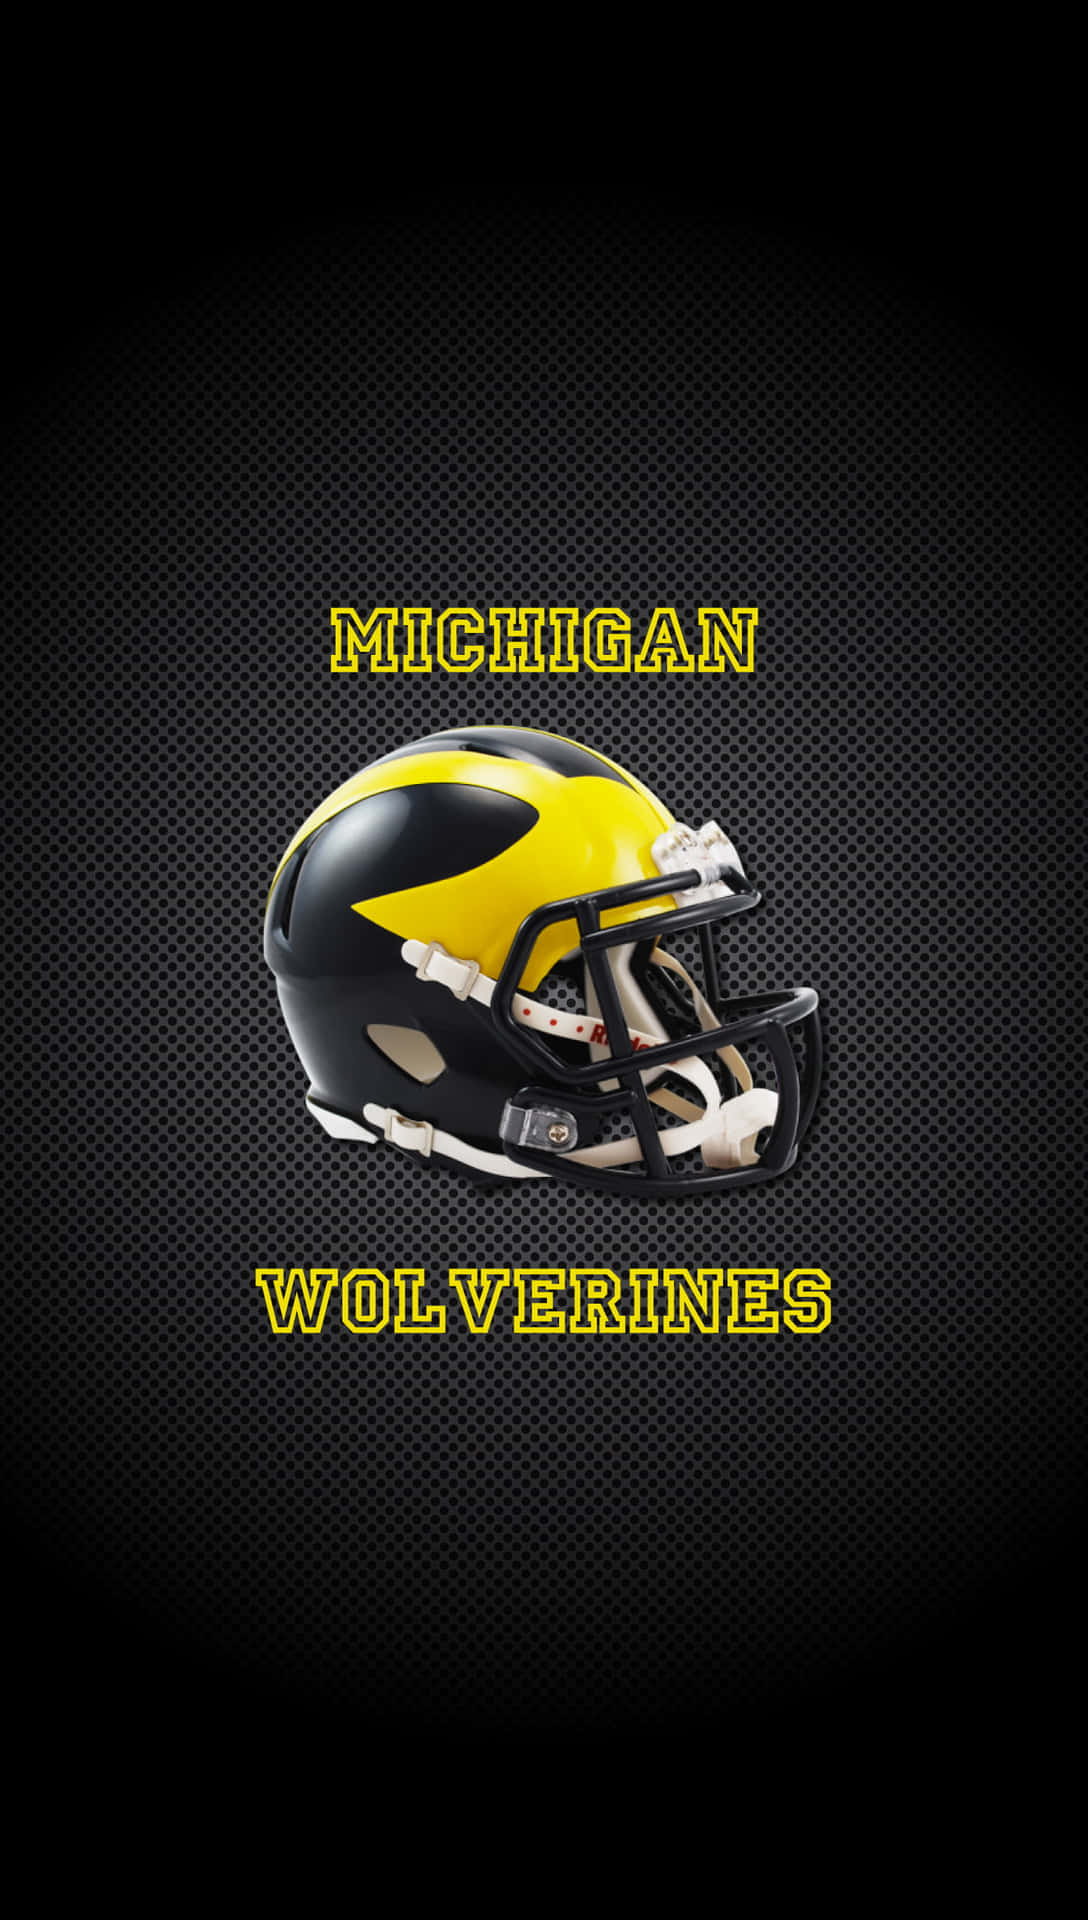 Michigan Wolverines Football Team Charging the Field Wallpaper